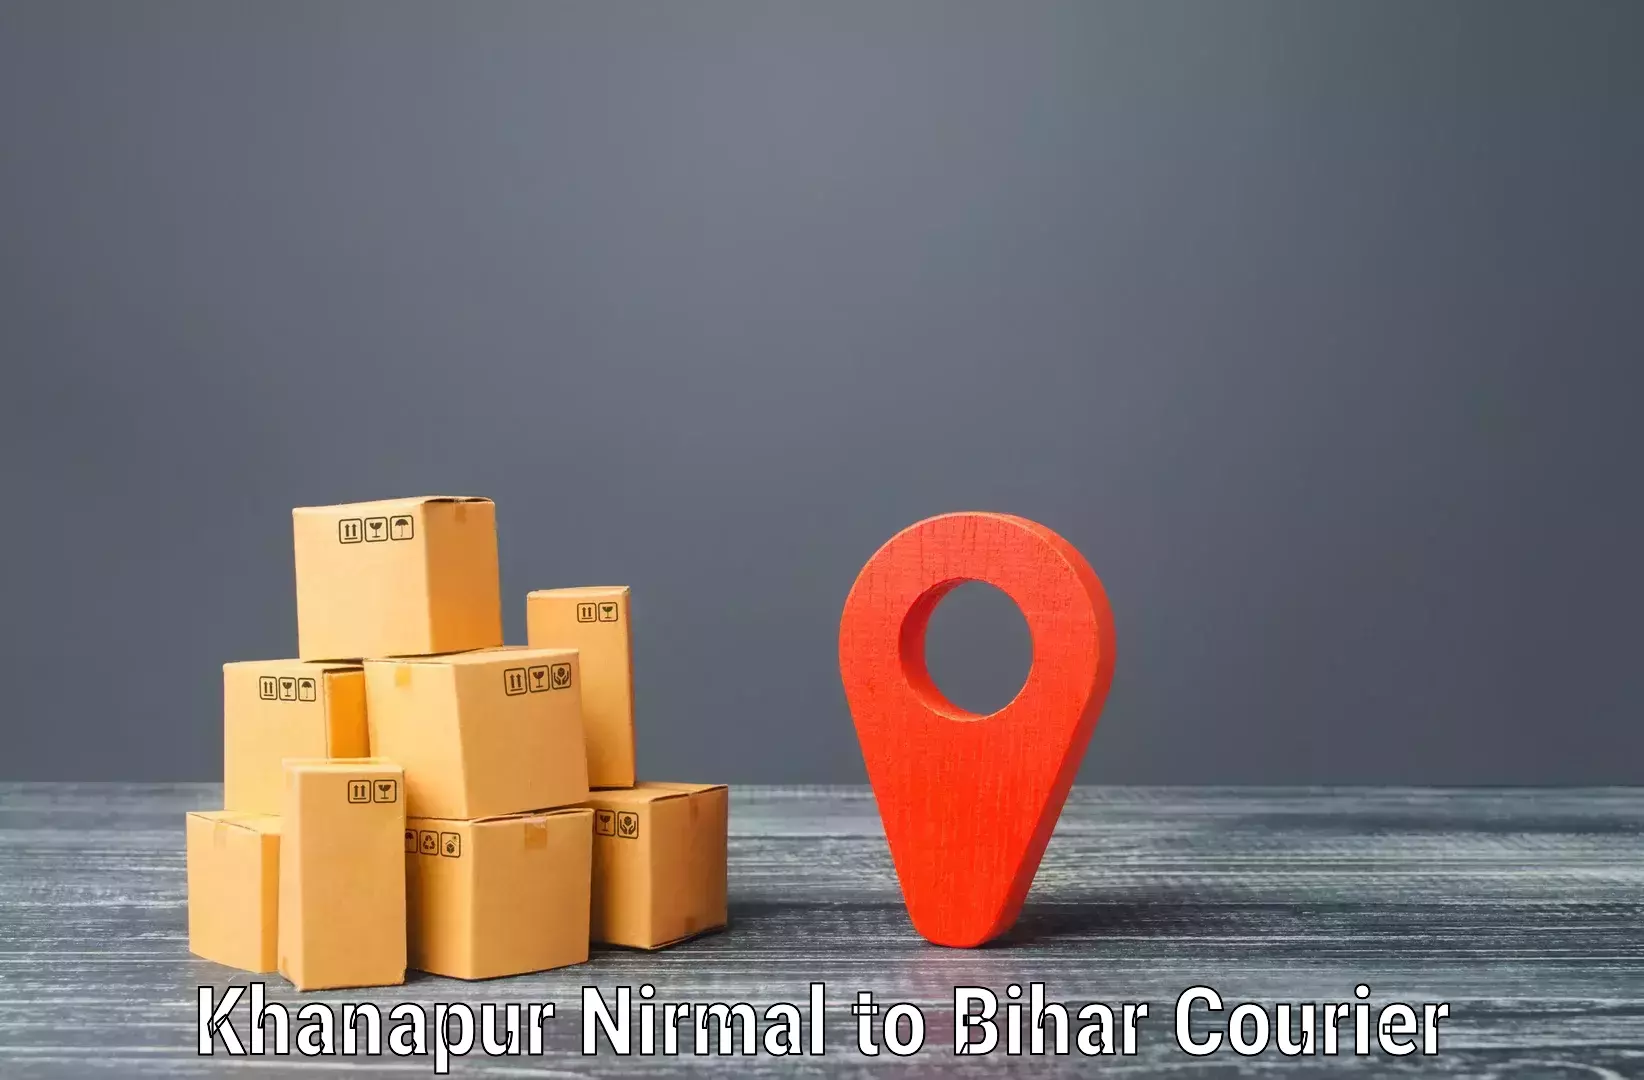 Courier service innovation Khanapur Nirmal to Manihari